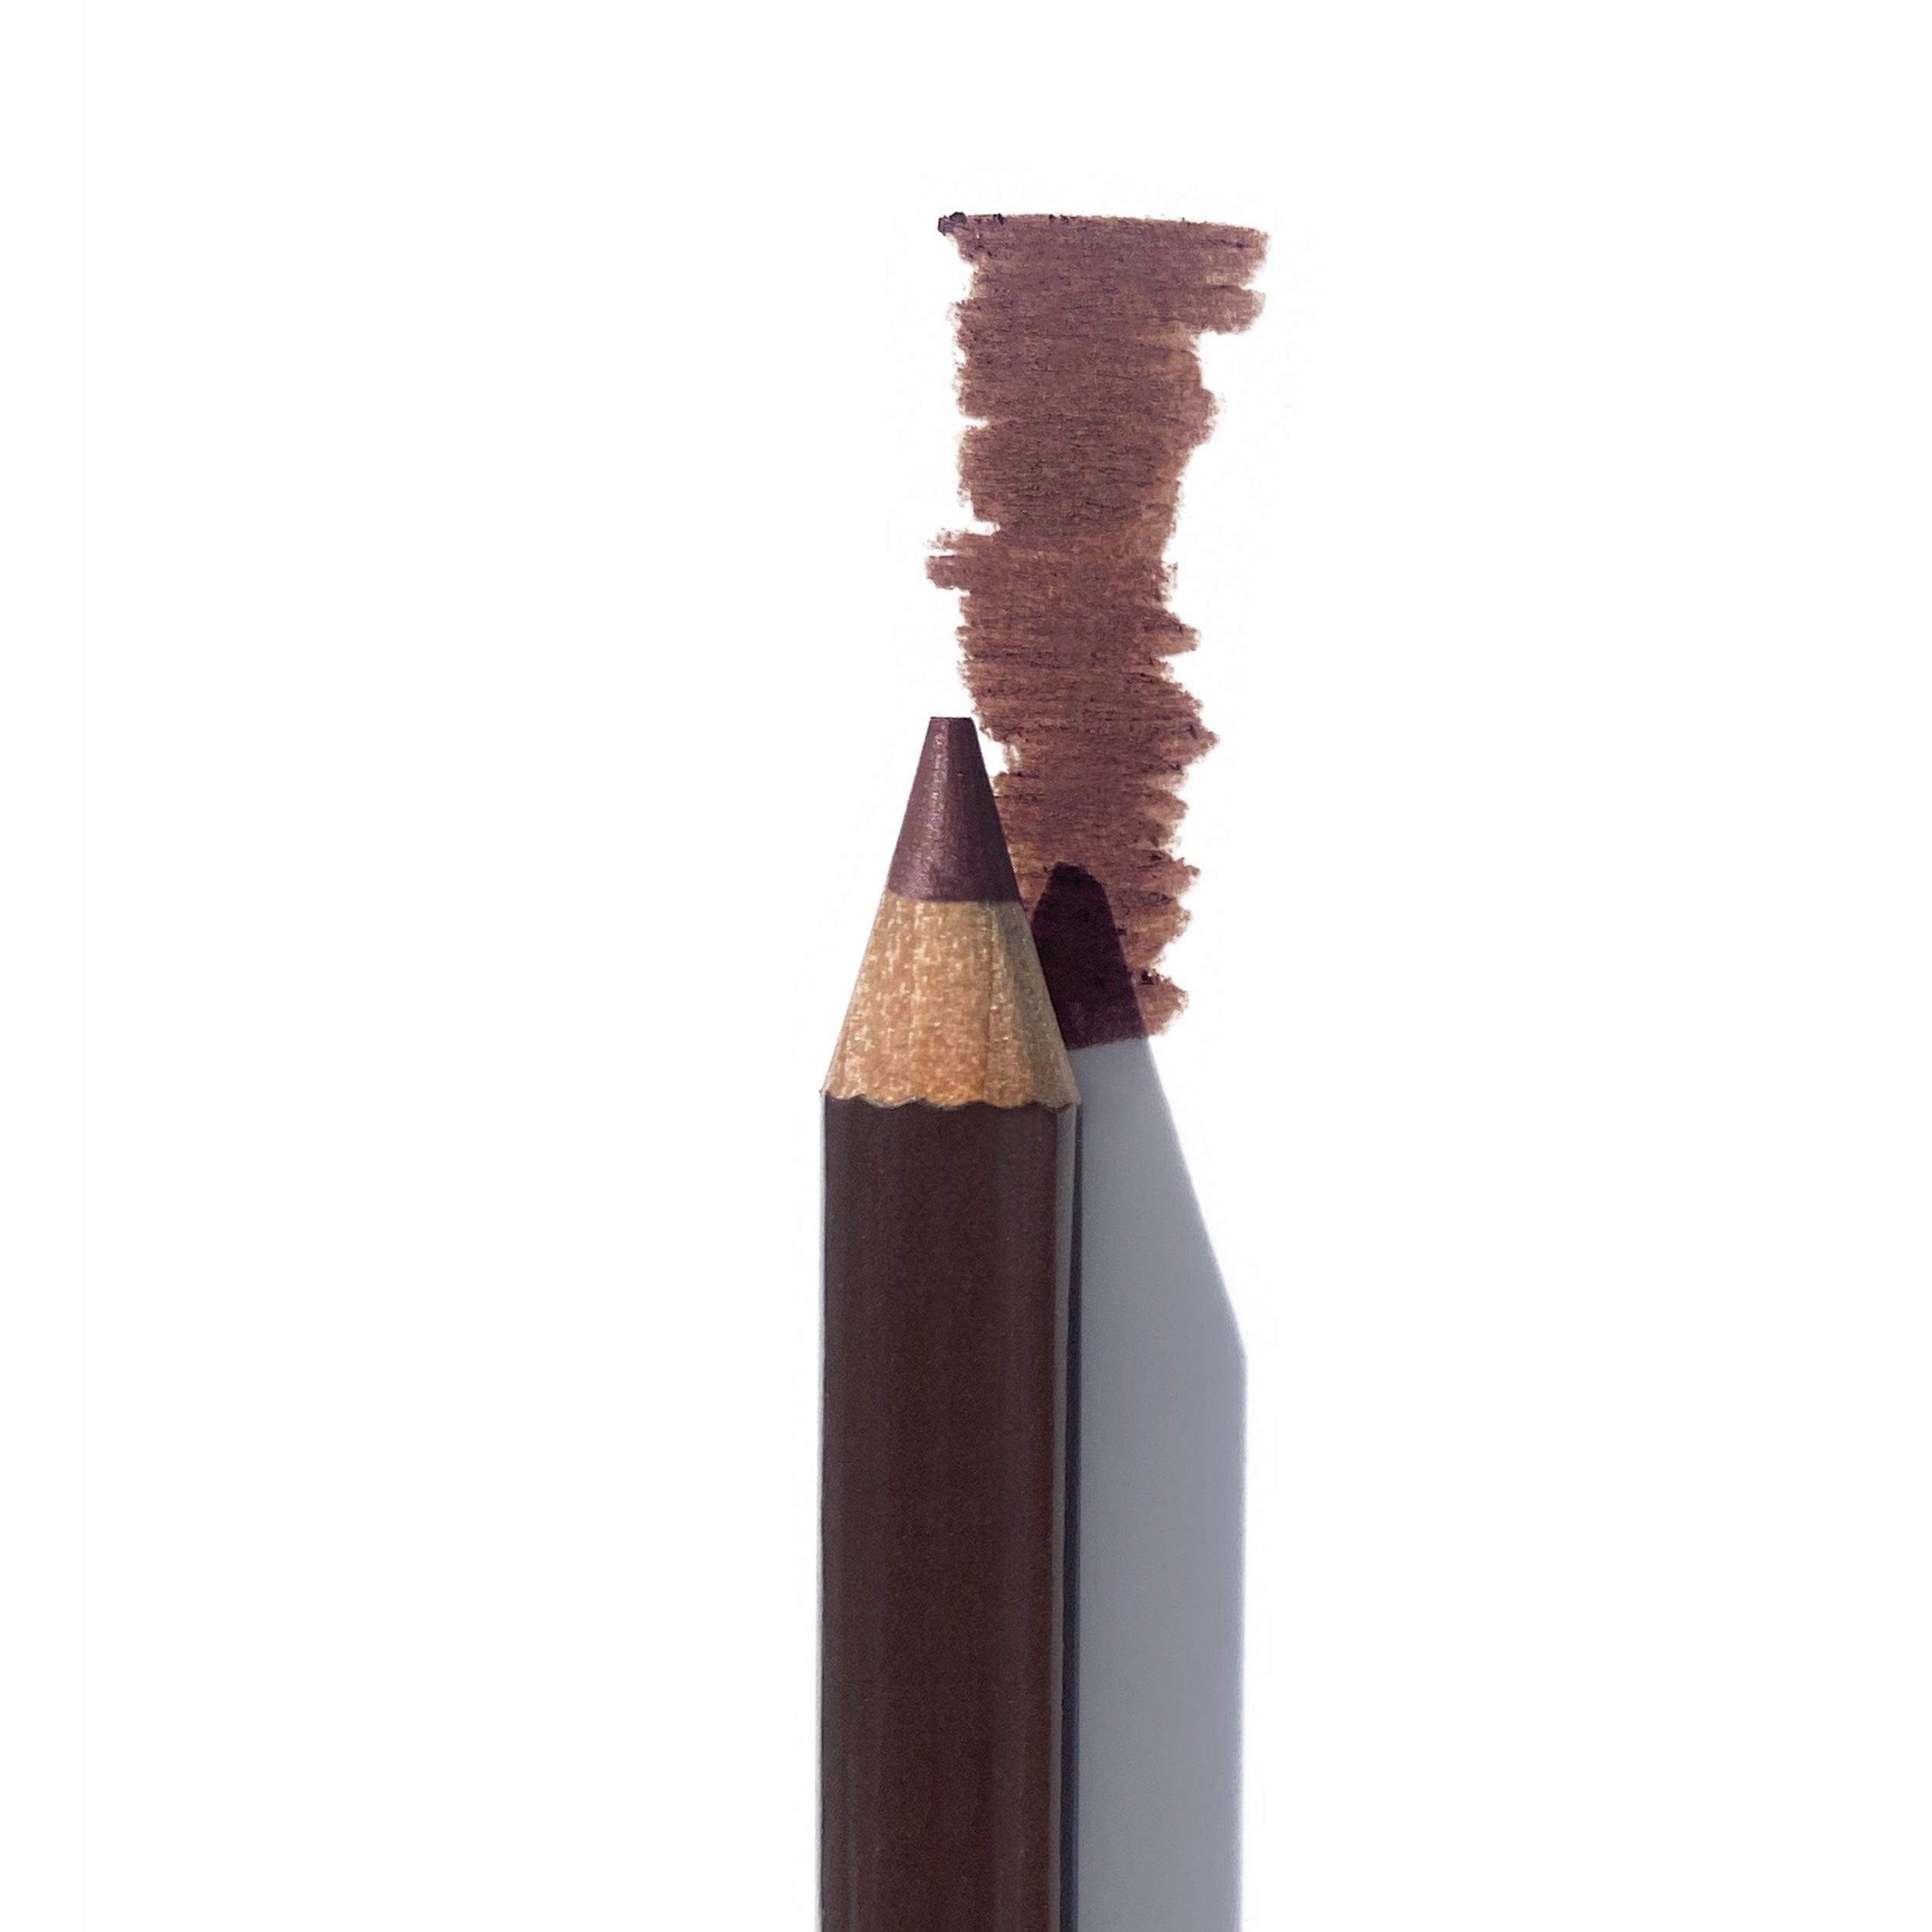 Eyeliner Pencil